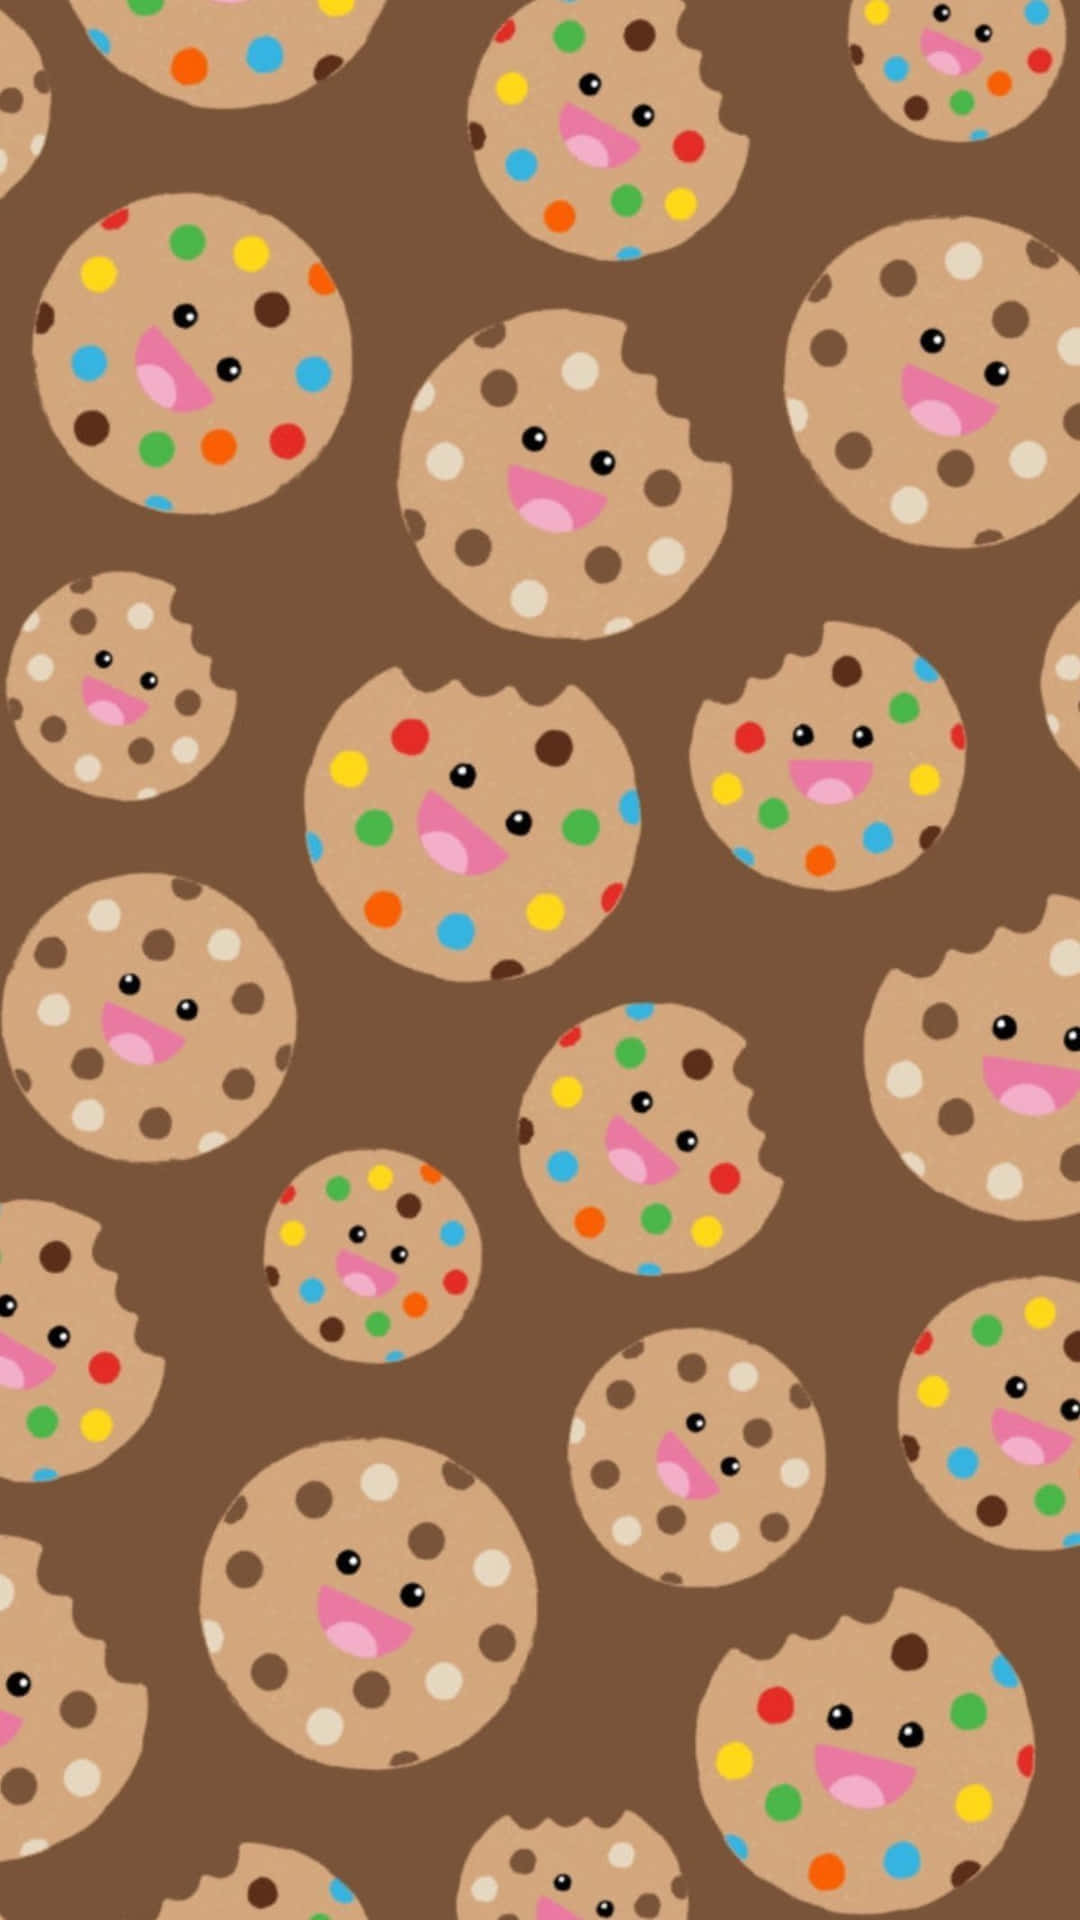 Free Cookies Wallpaper Downloads, [200+] Cookies Wallpapers for FREE |  